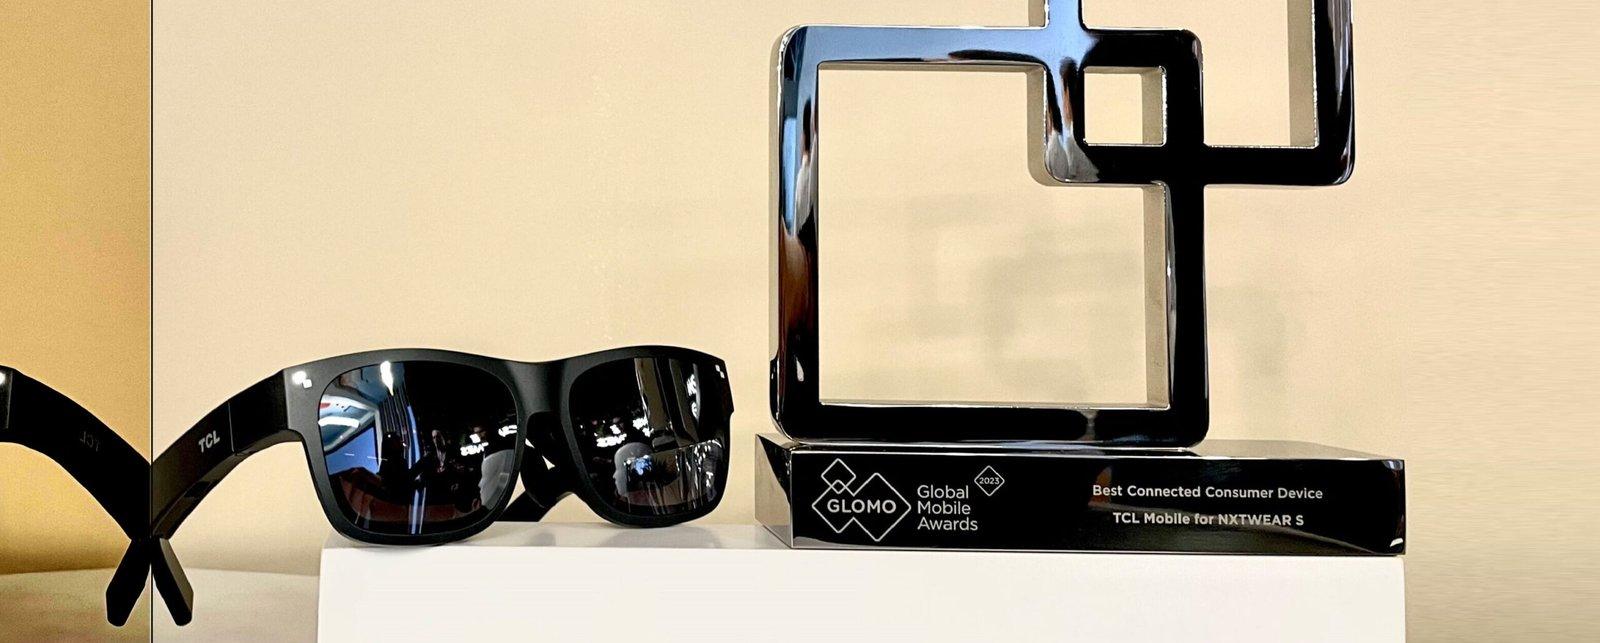 Óculos Nxtwear S vencem o prêmio Global Mobile Awards